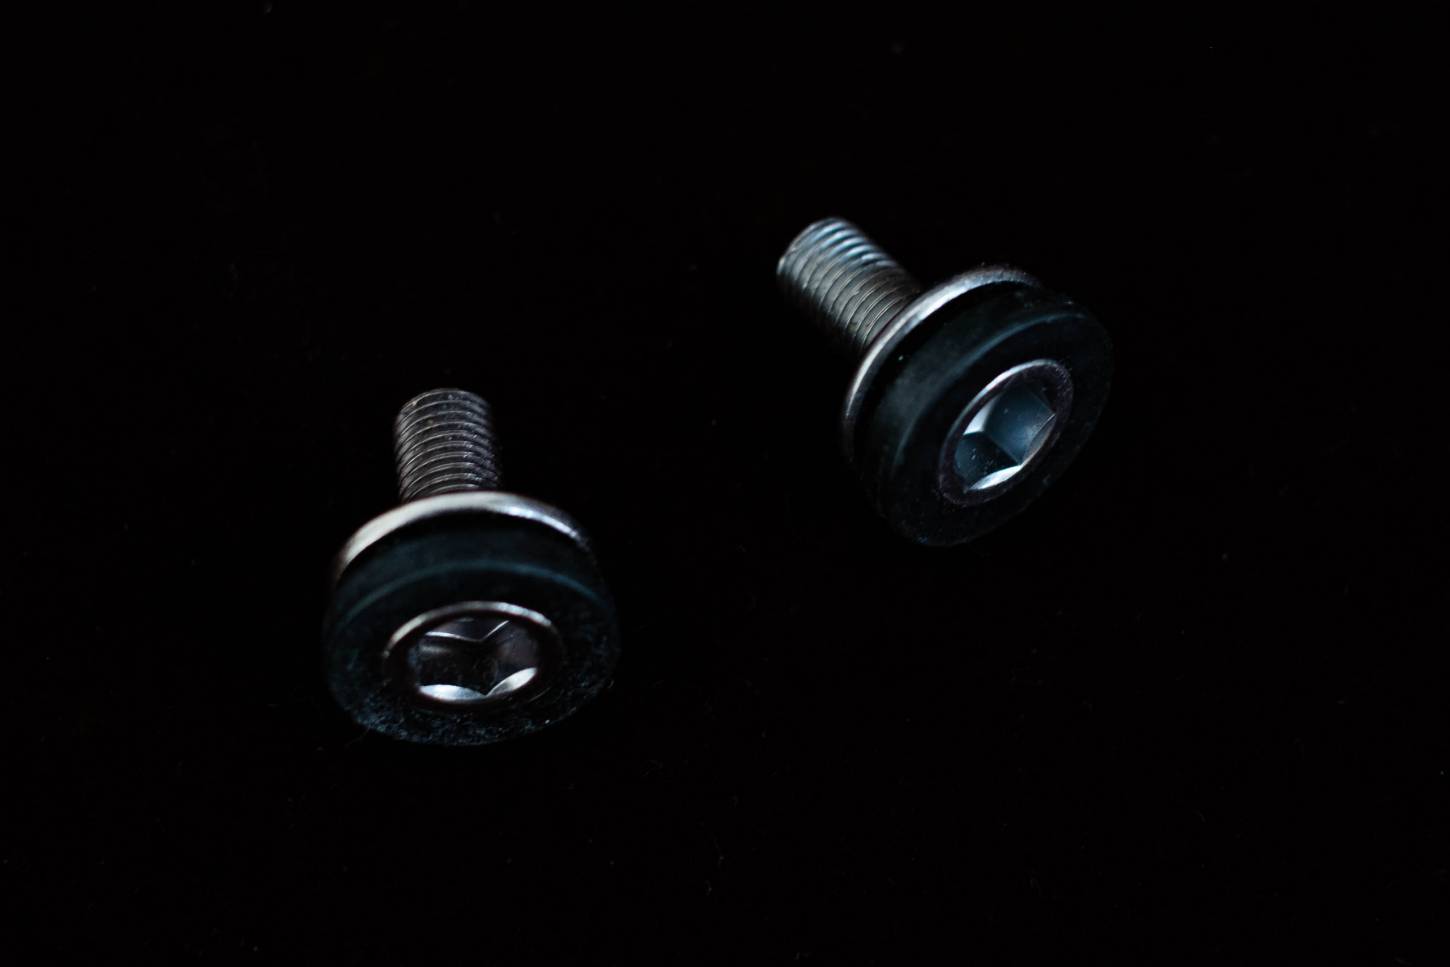 2x crank screws for square socket Allen